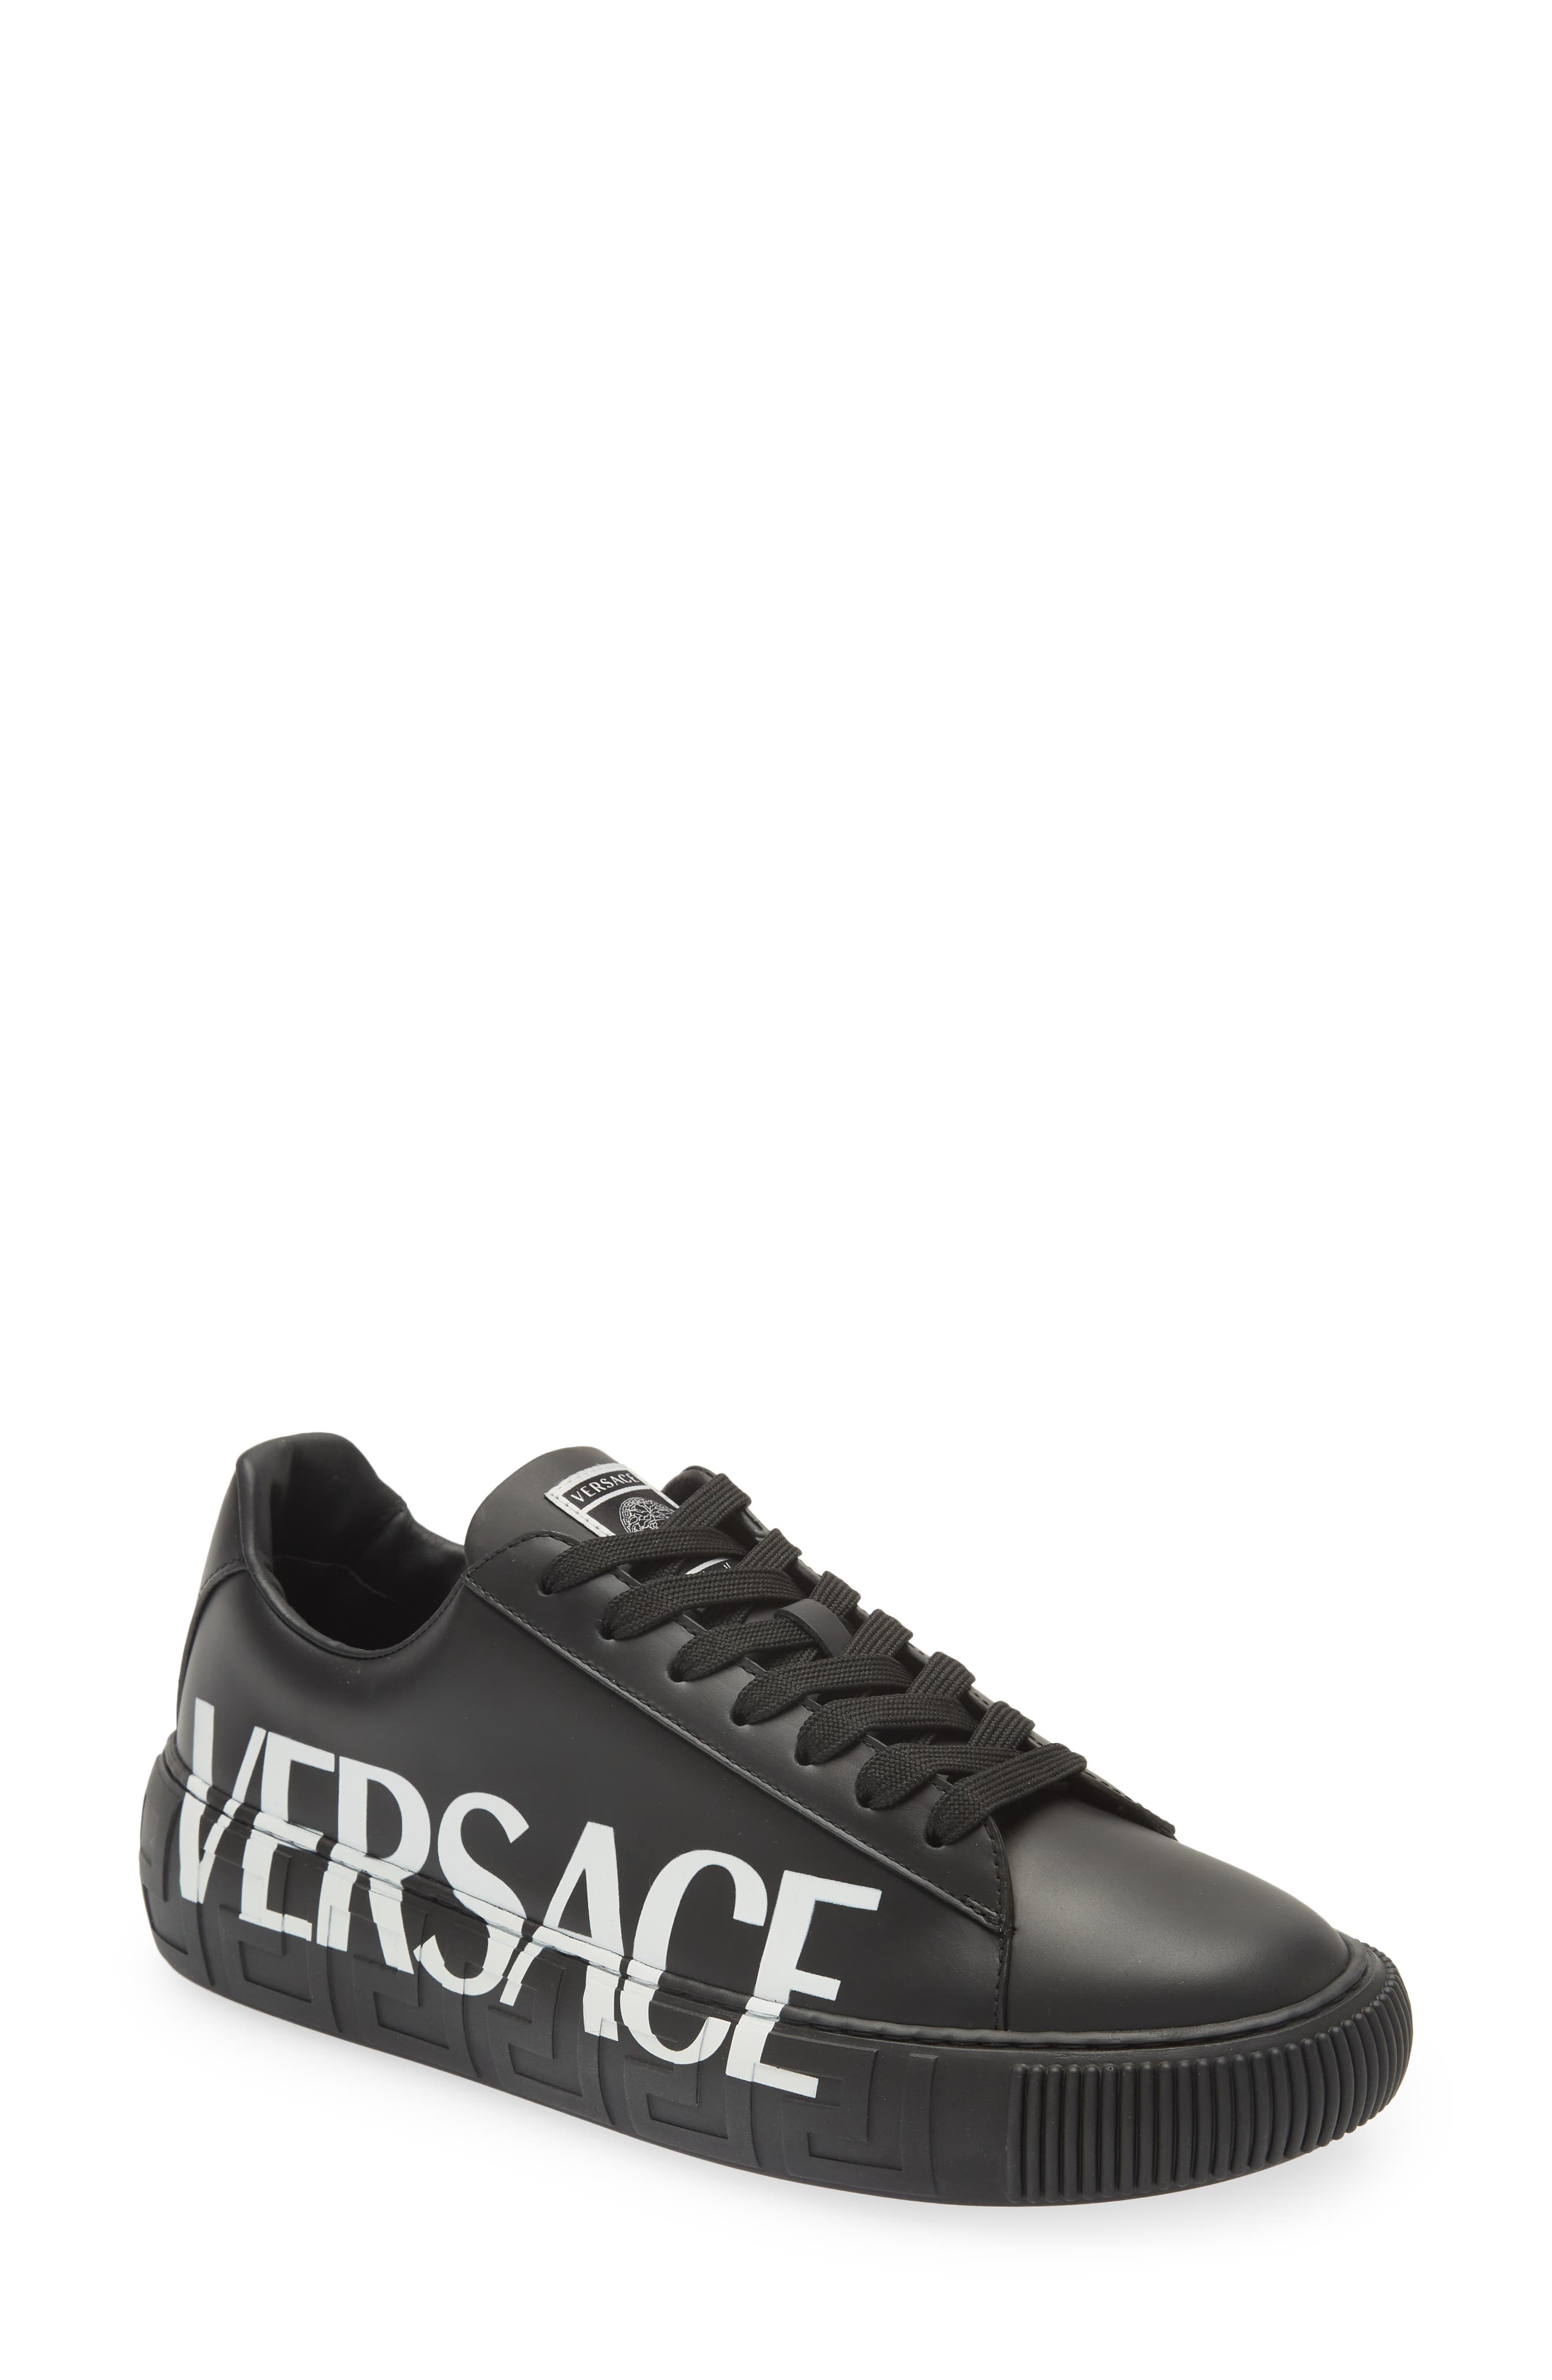 VERSACE Greca Logo Low Top Sneaker in Black White